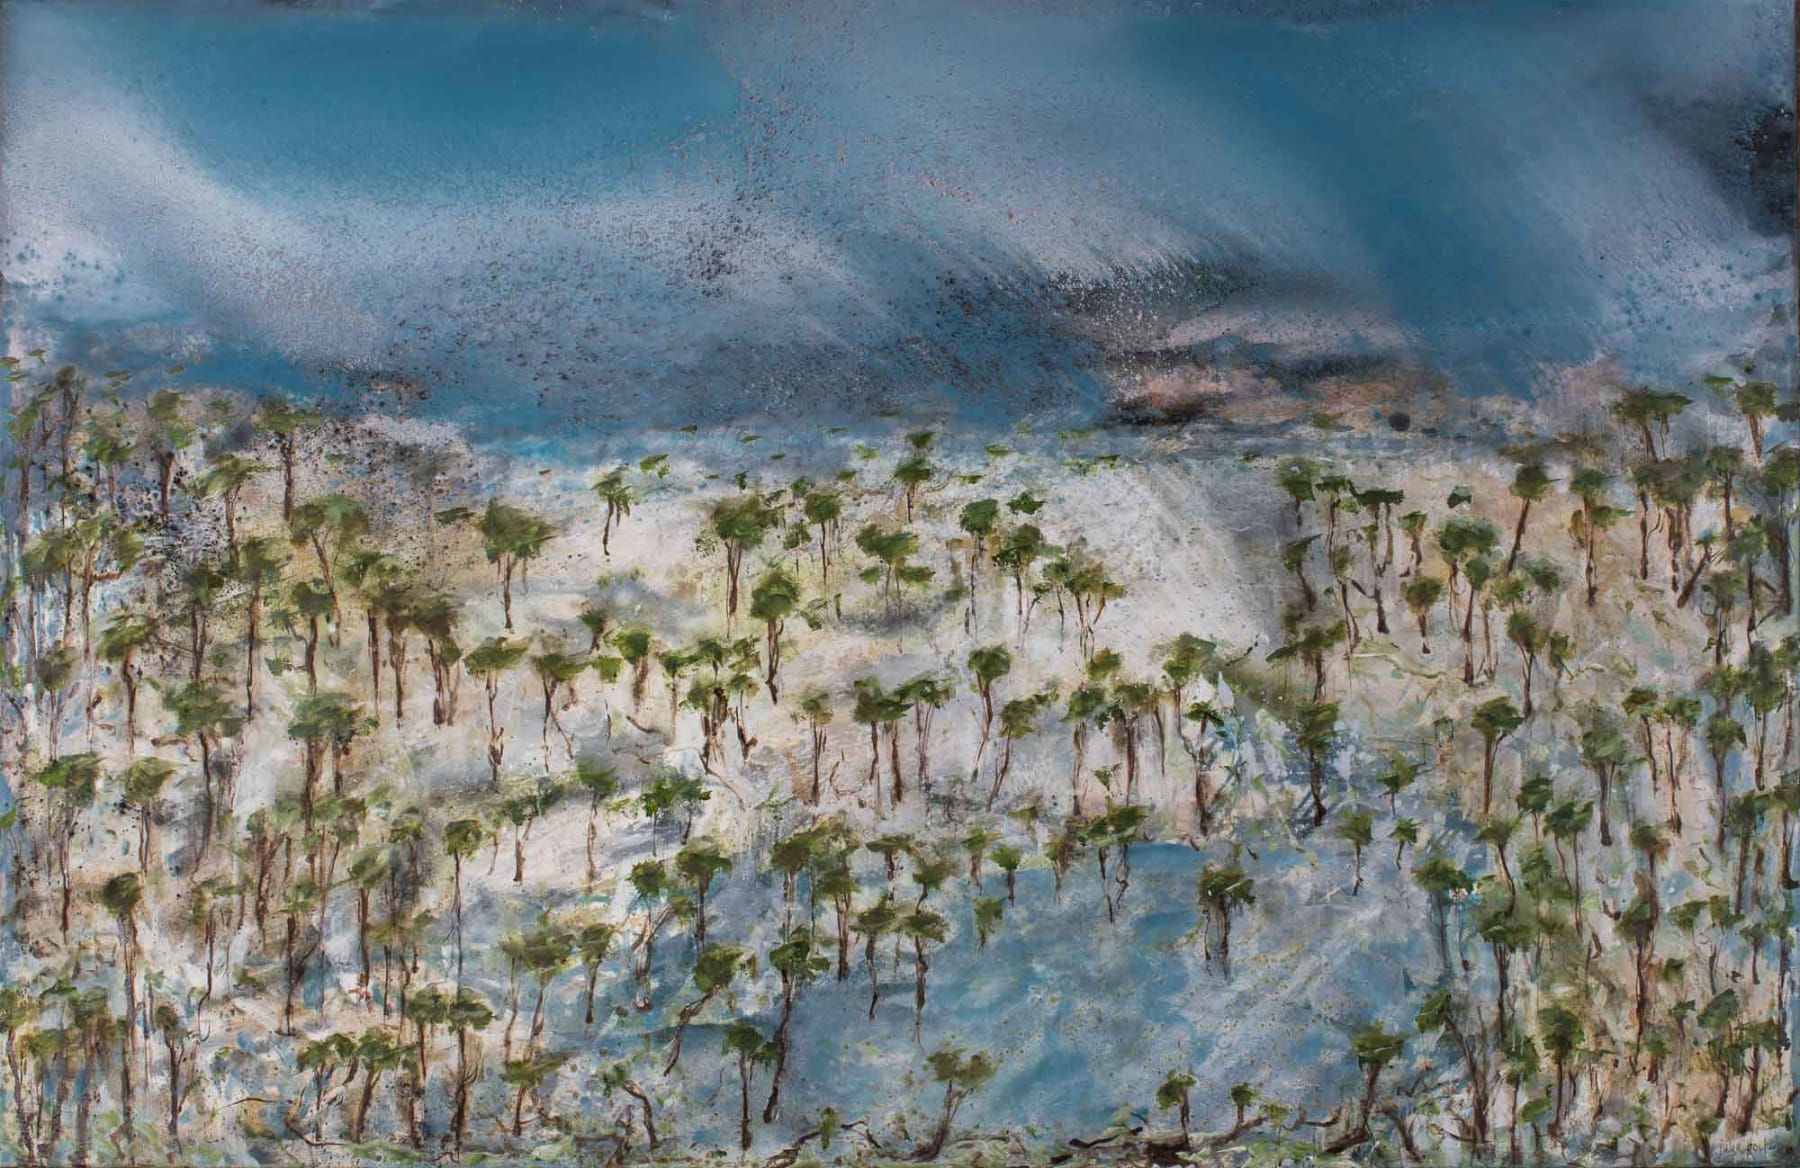 JULIA ROCHE BLUE BIRD Oil, Mixed Media on Canvas 200 x 130cm $9350 SOLD